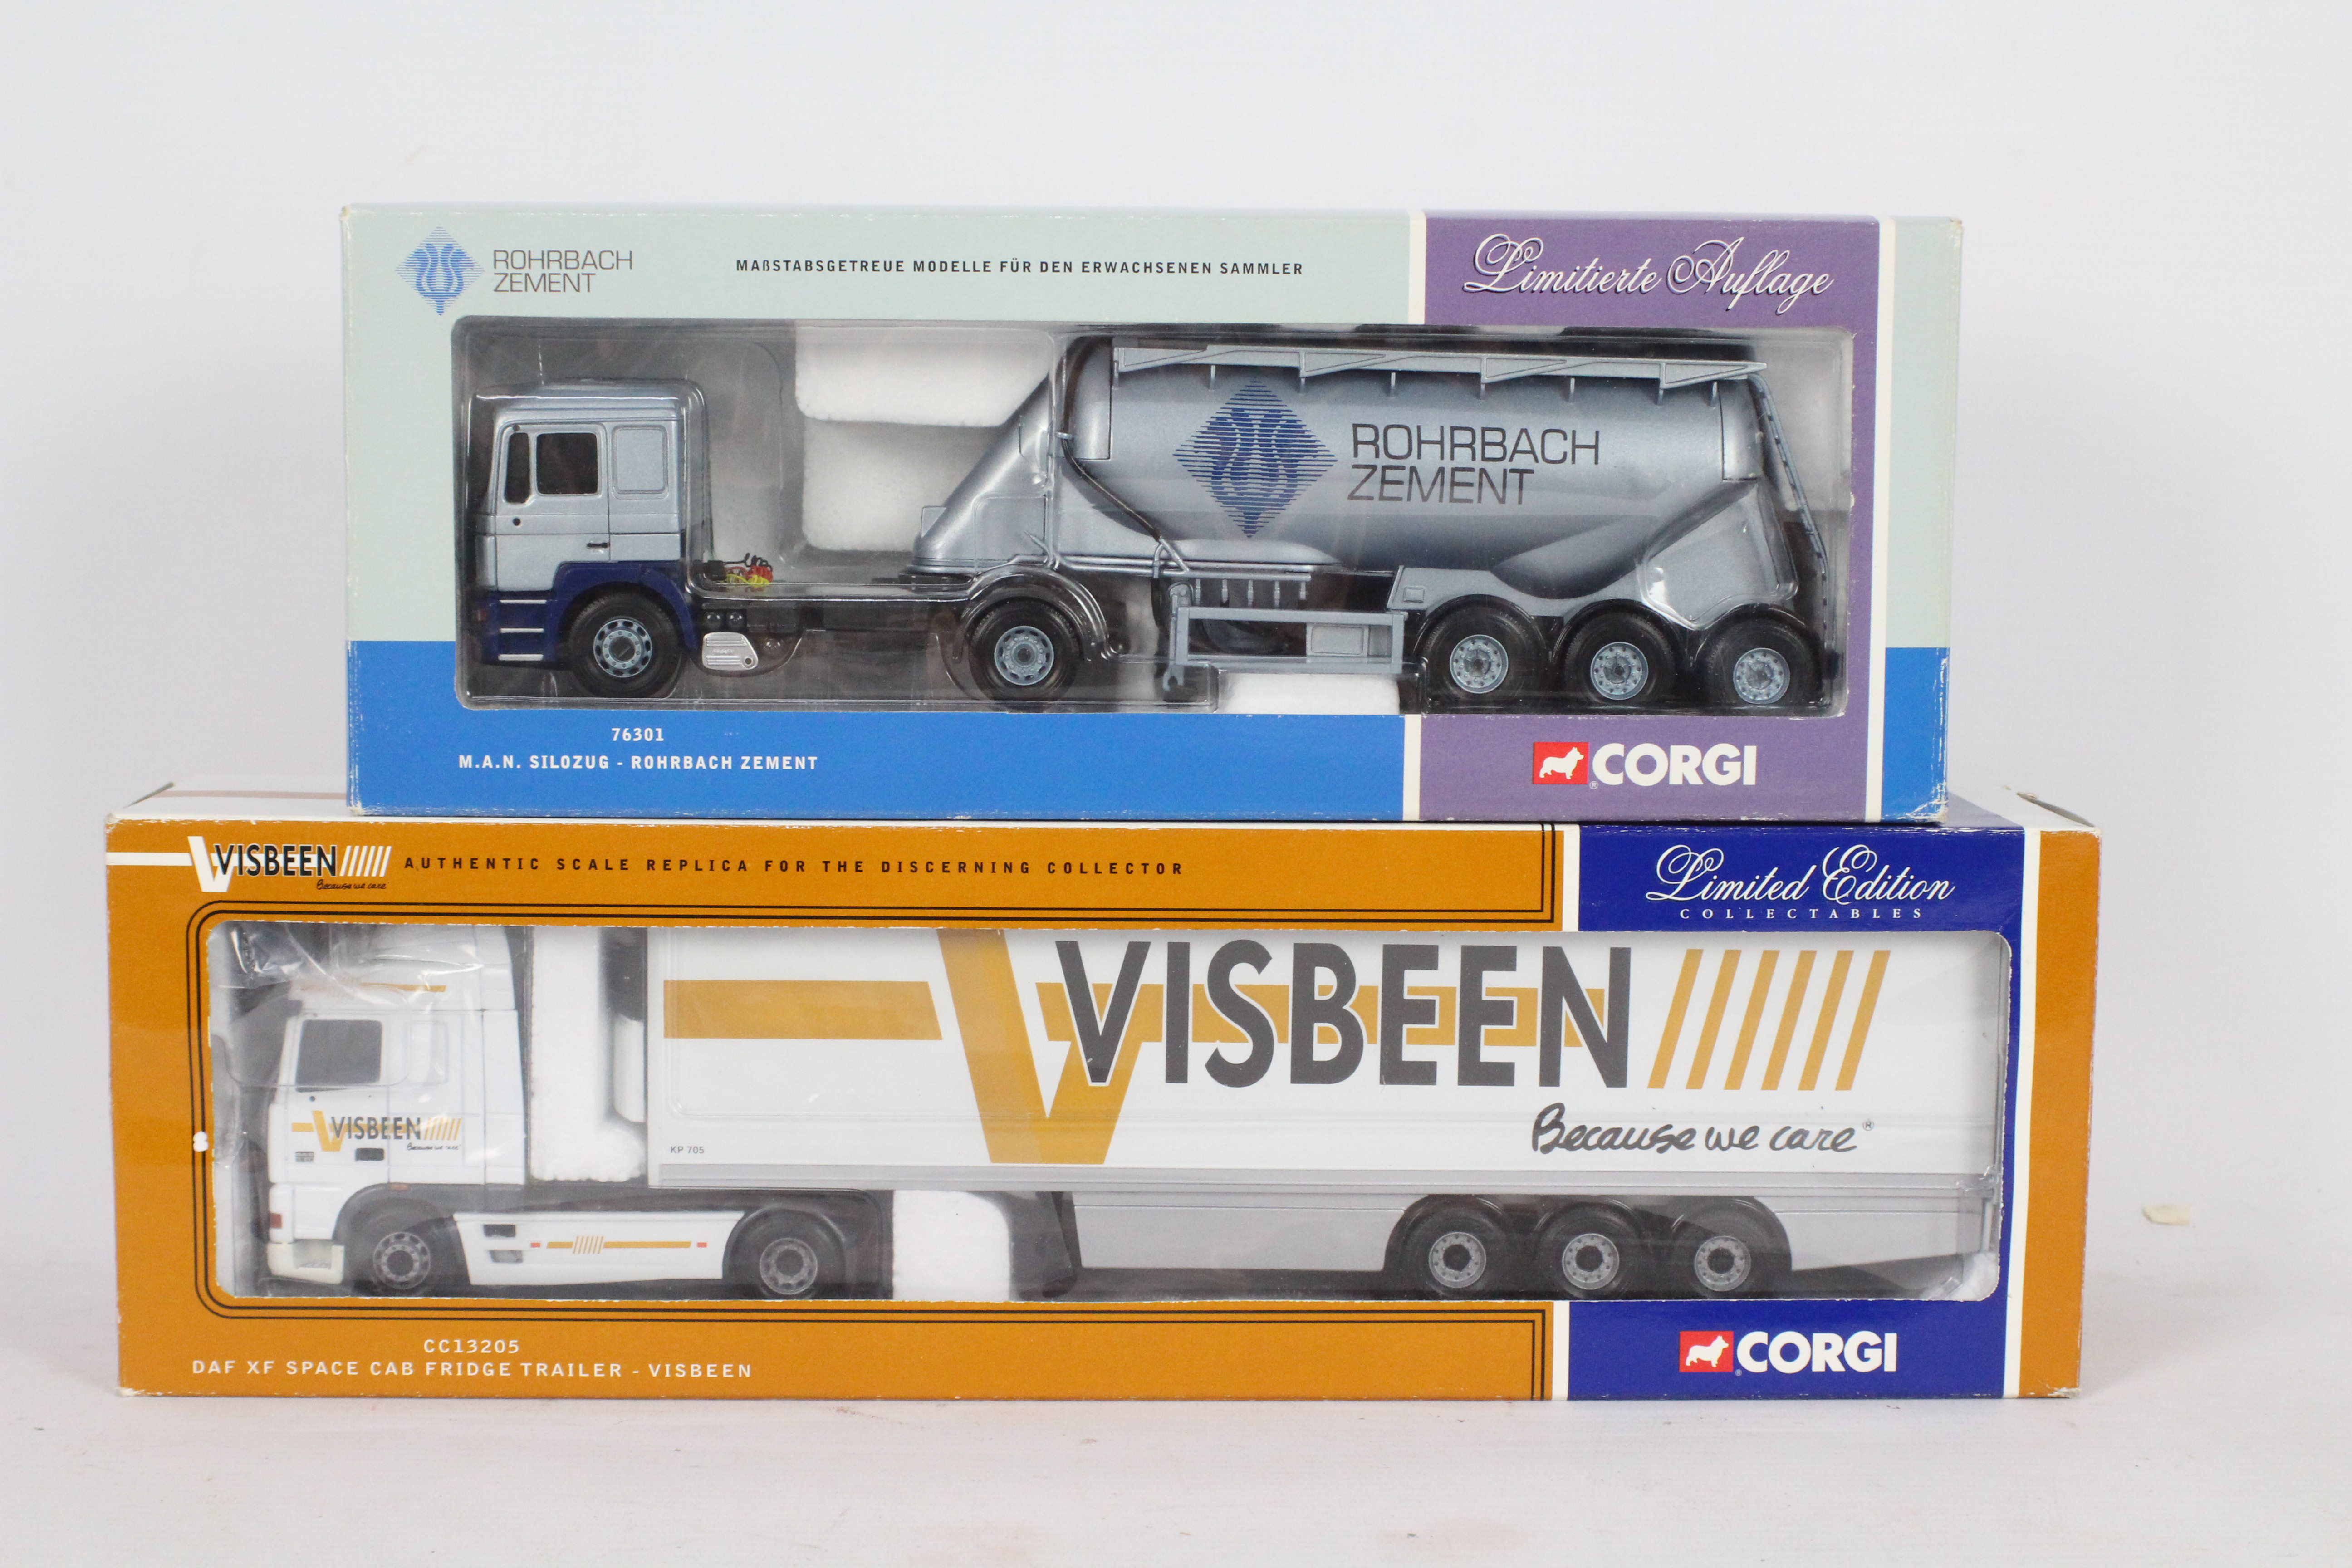 Corgi - Two boxed Limited Edition 1:50 scale diecast model trucks from Corgi.